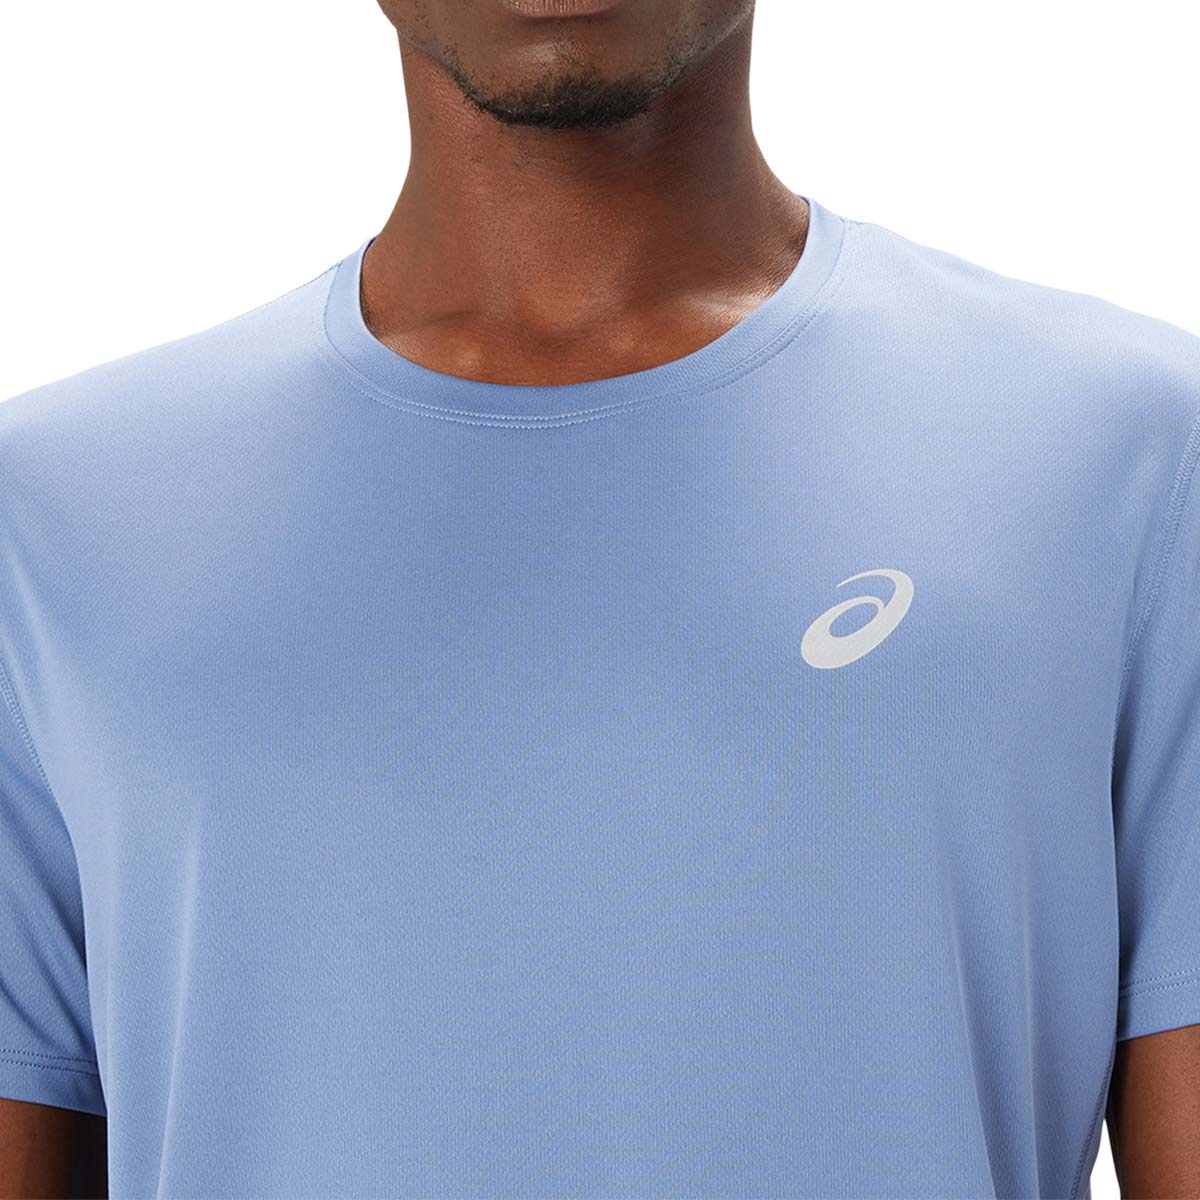 Asics Core Ss Top Men Denim Blue חולצת ריצה לגברים אסיקס